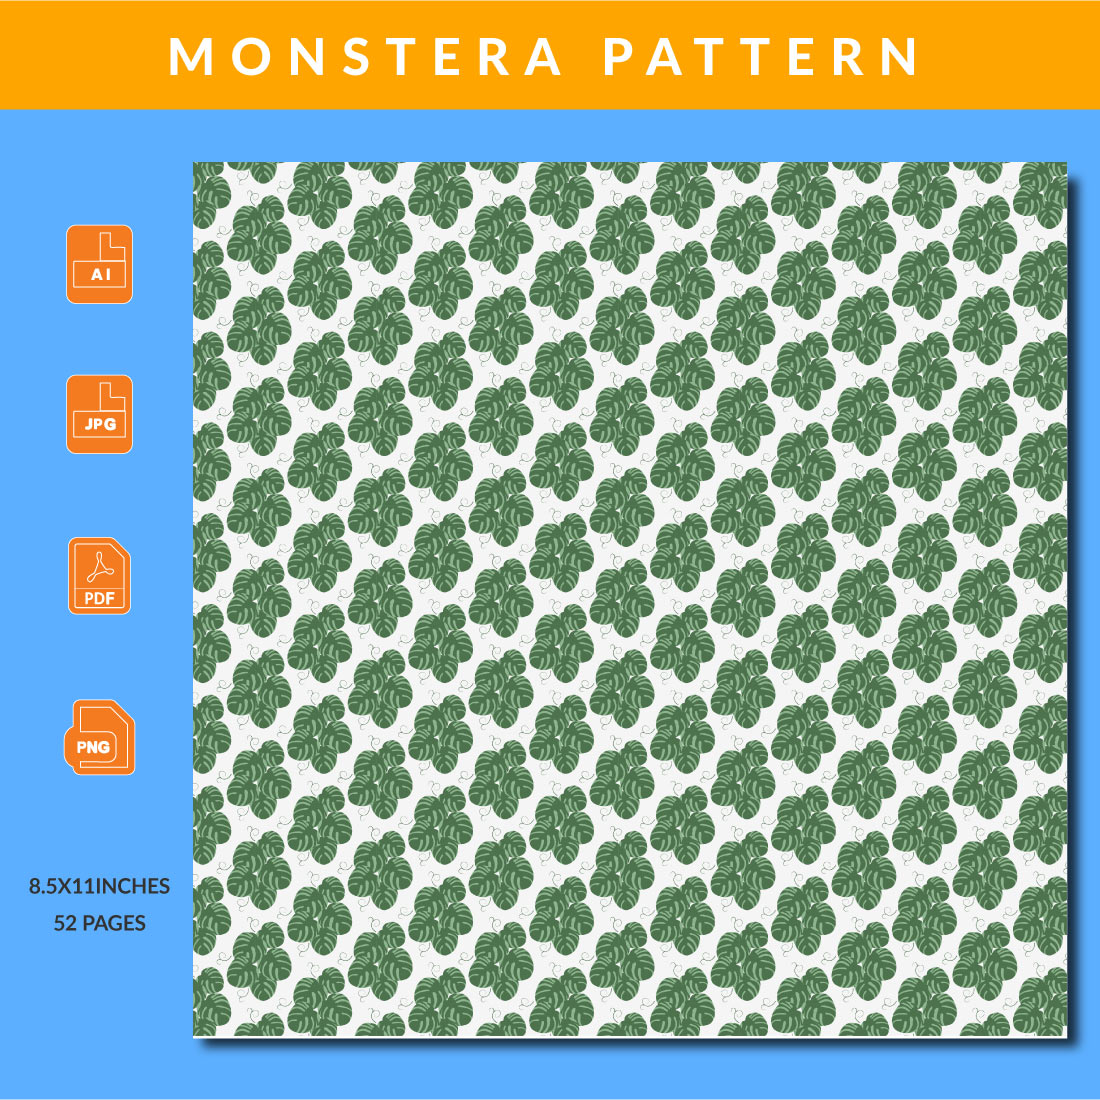 Monstera Pattern Design cover image.